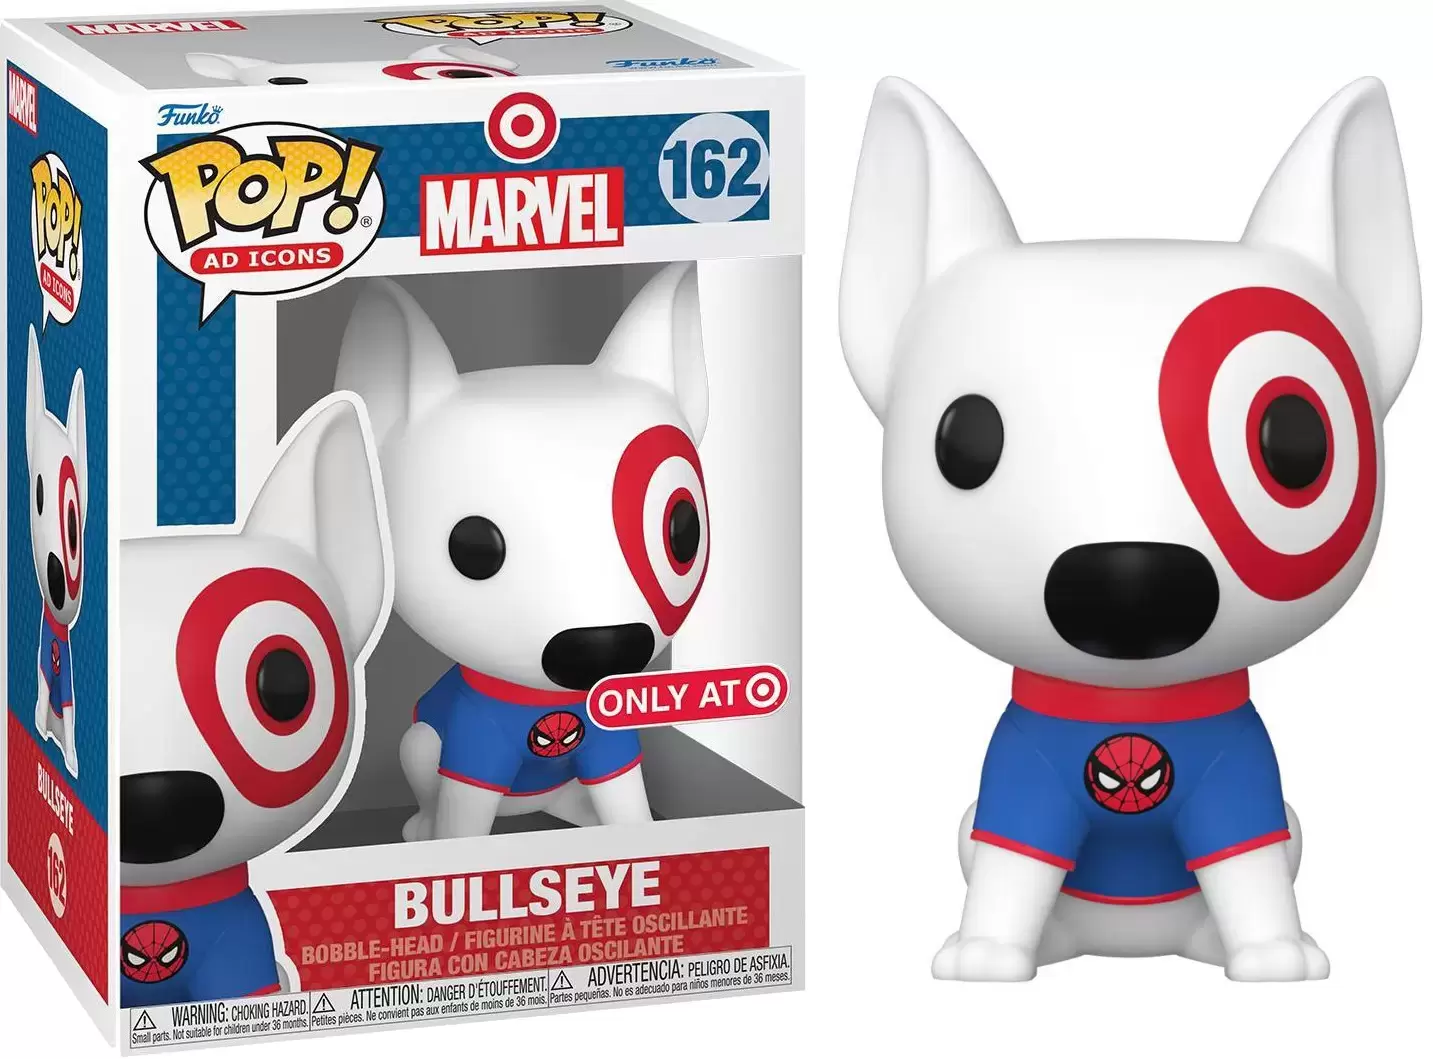 POP! Ad Icons - Marvel - Bullseye